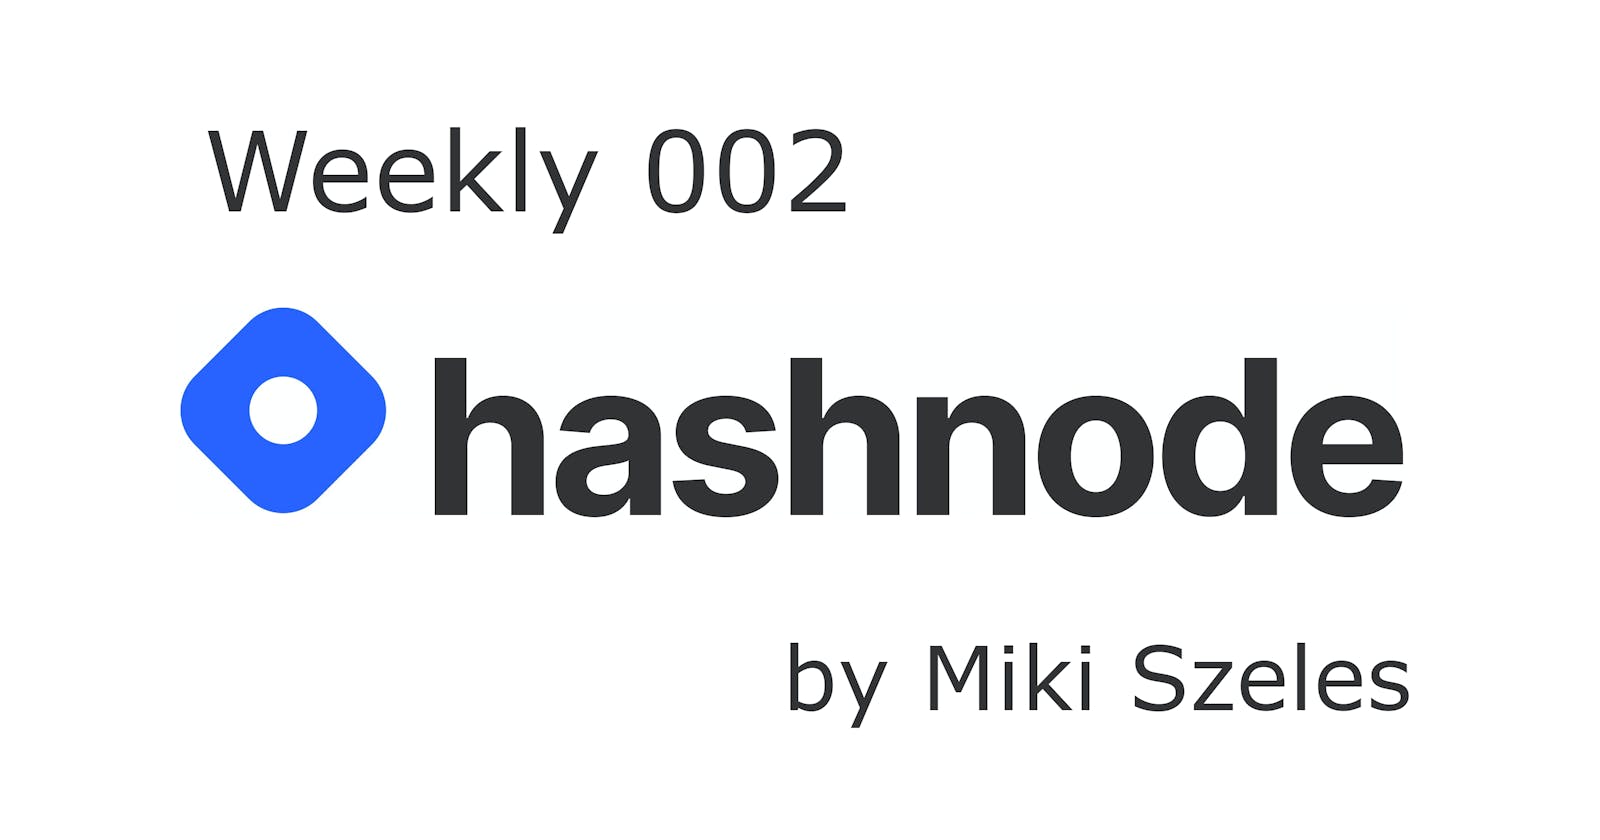 Hashnode Weekly 002 by Miki Szeles